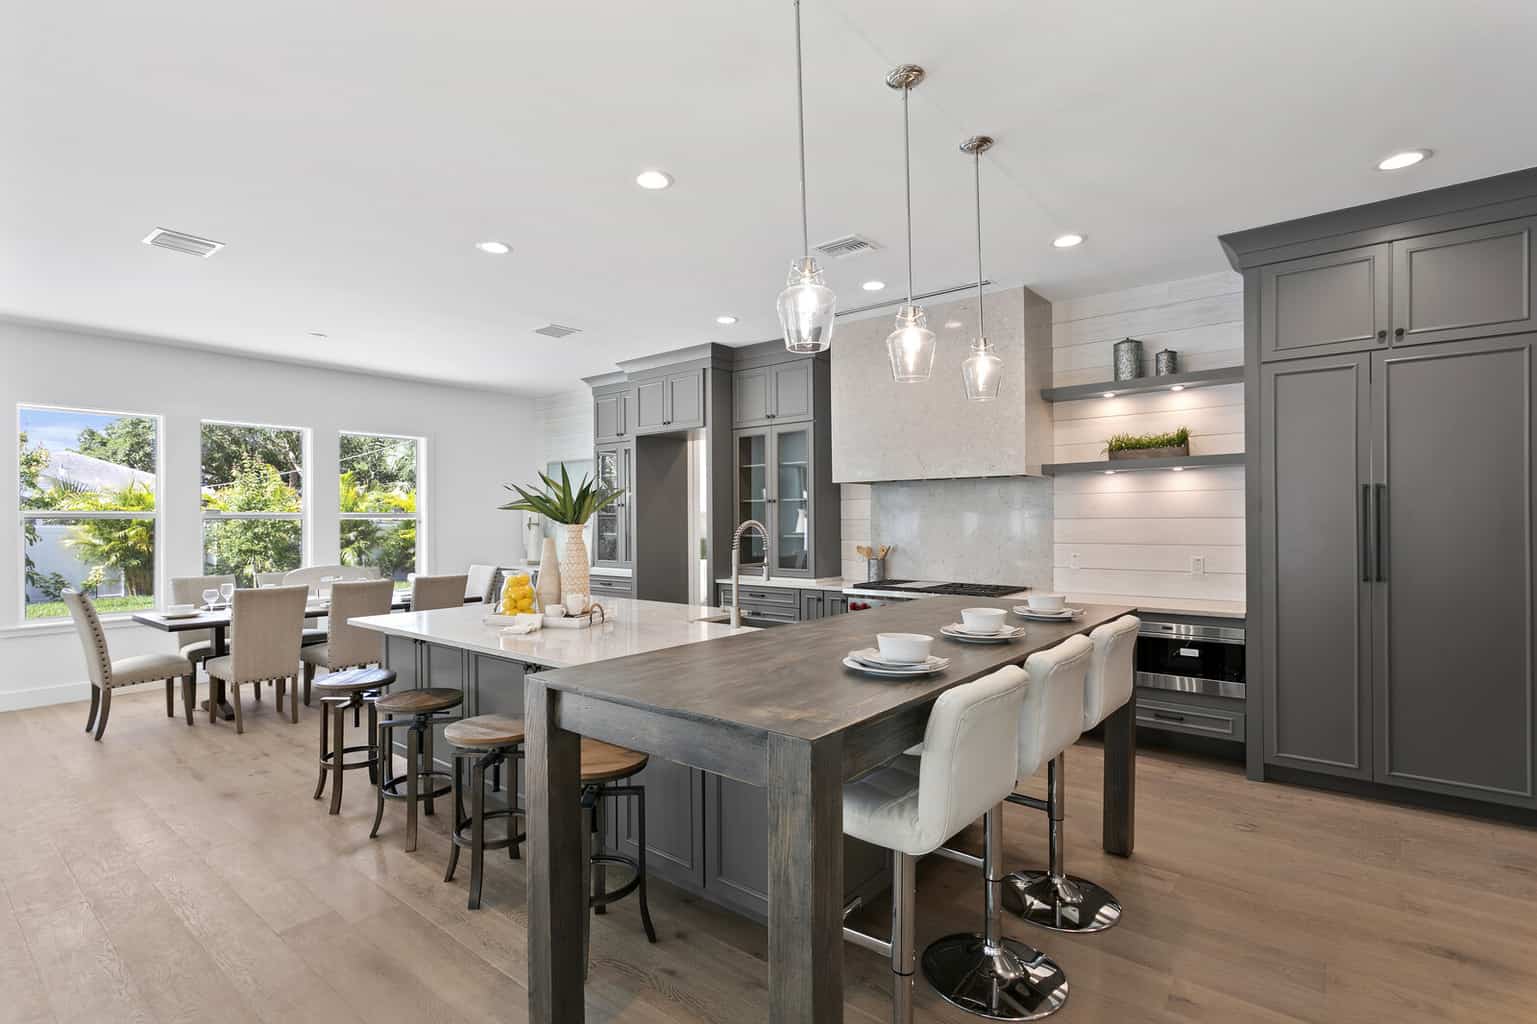 Adobe Homes Florida | Kitchens